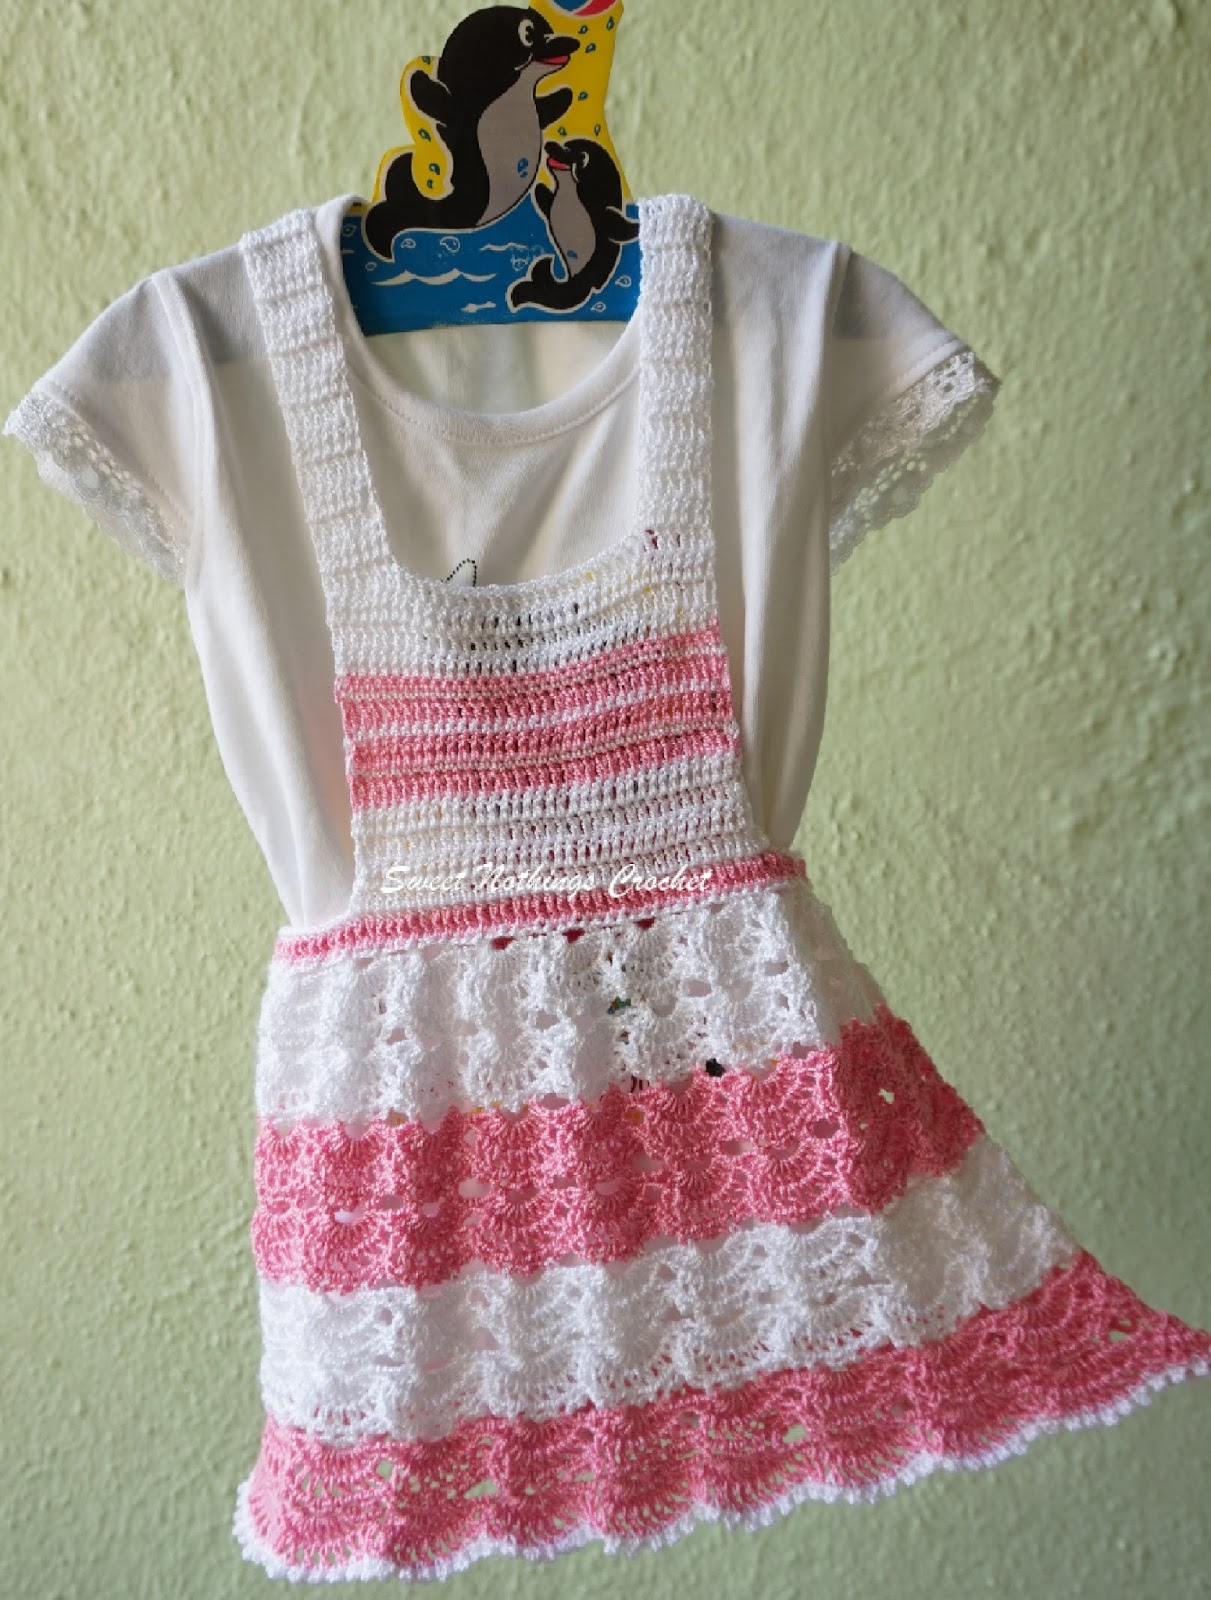 Crochet Baby Pinafore Dress Pattern Sweet Nothings Crochet Shelled Pinafore Ba Dress